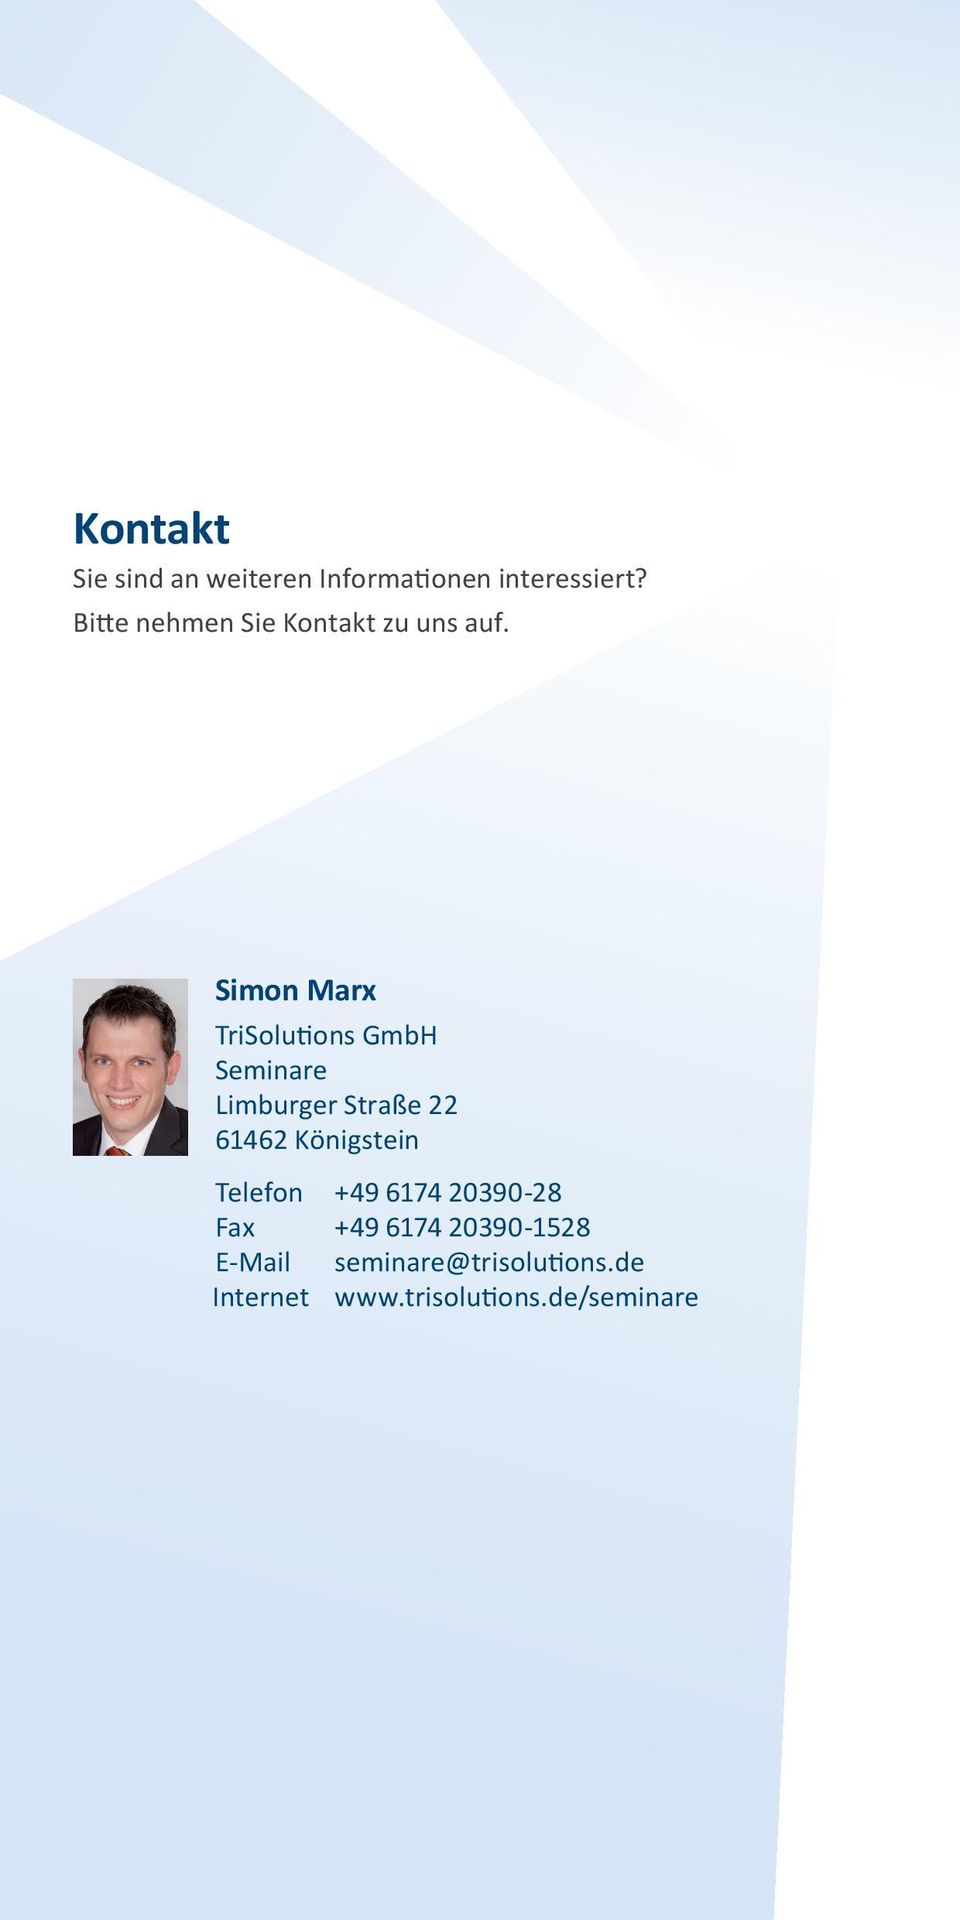 Simon Marx TriSolutions GmbH Seminare Limburger Straße 22 61462